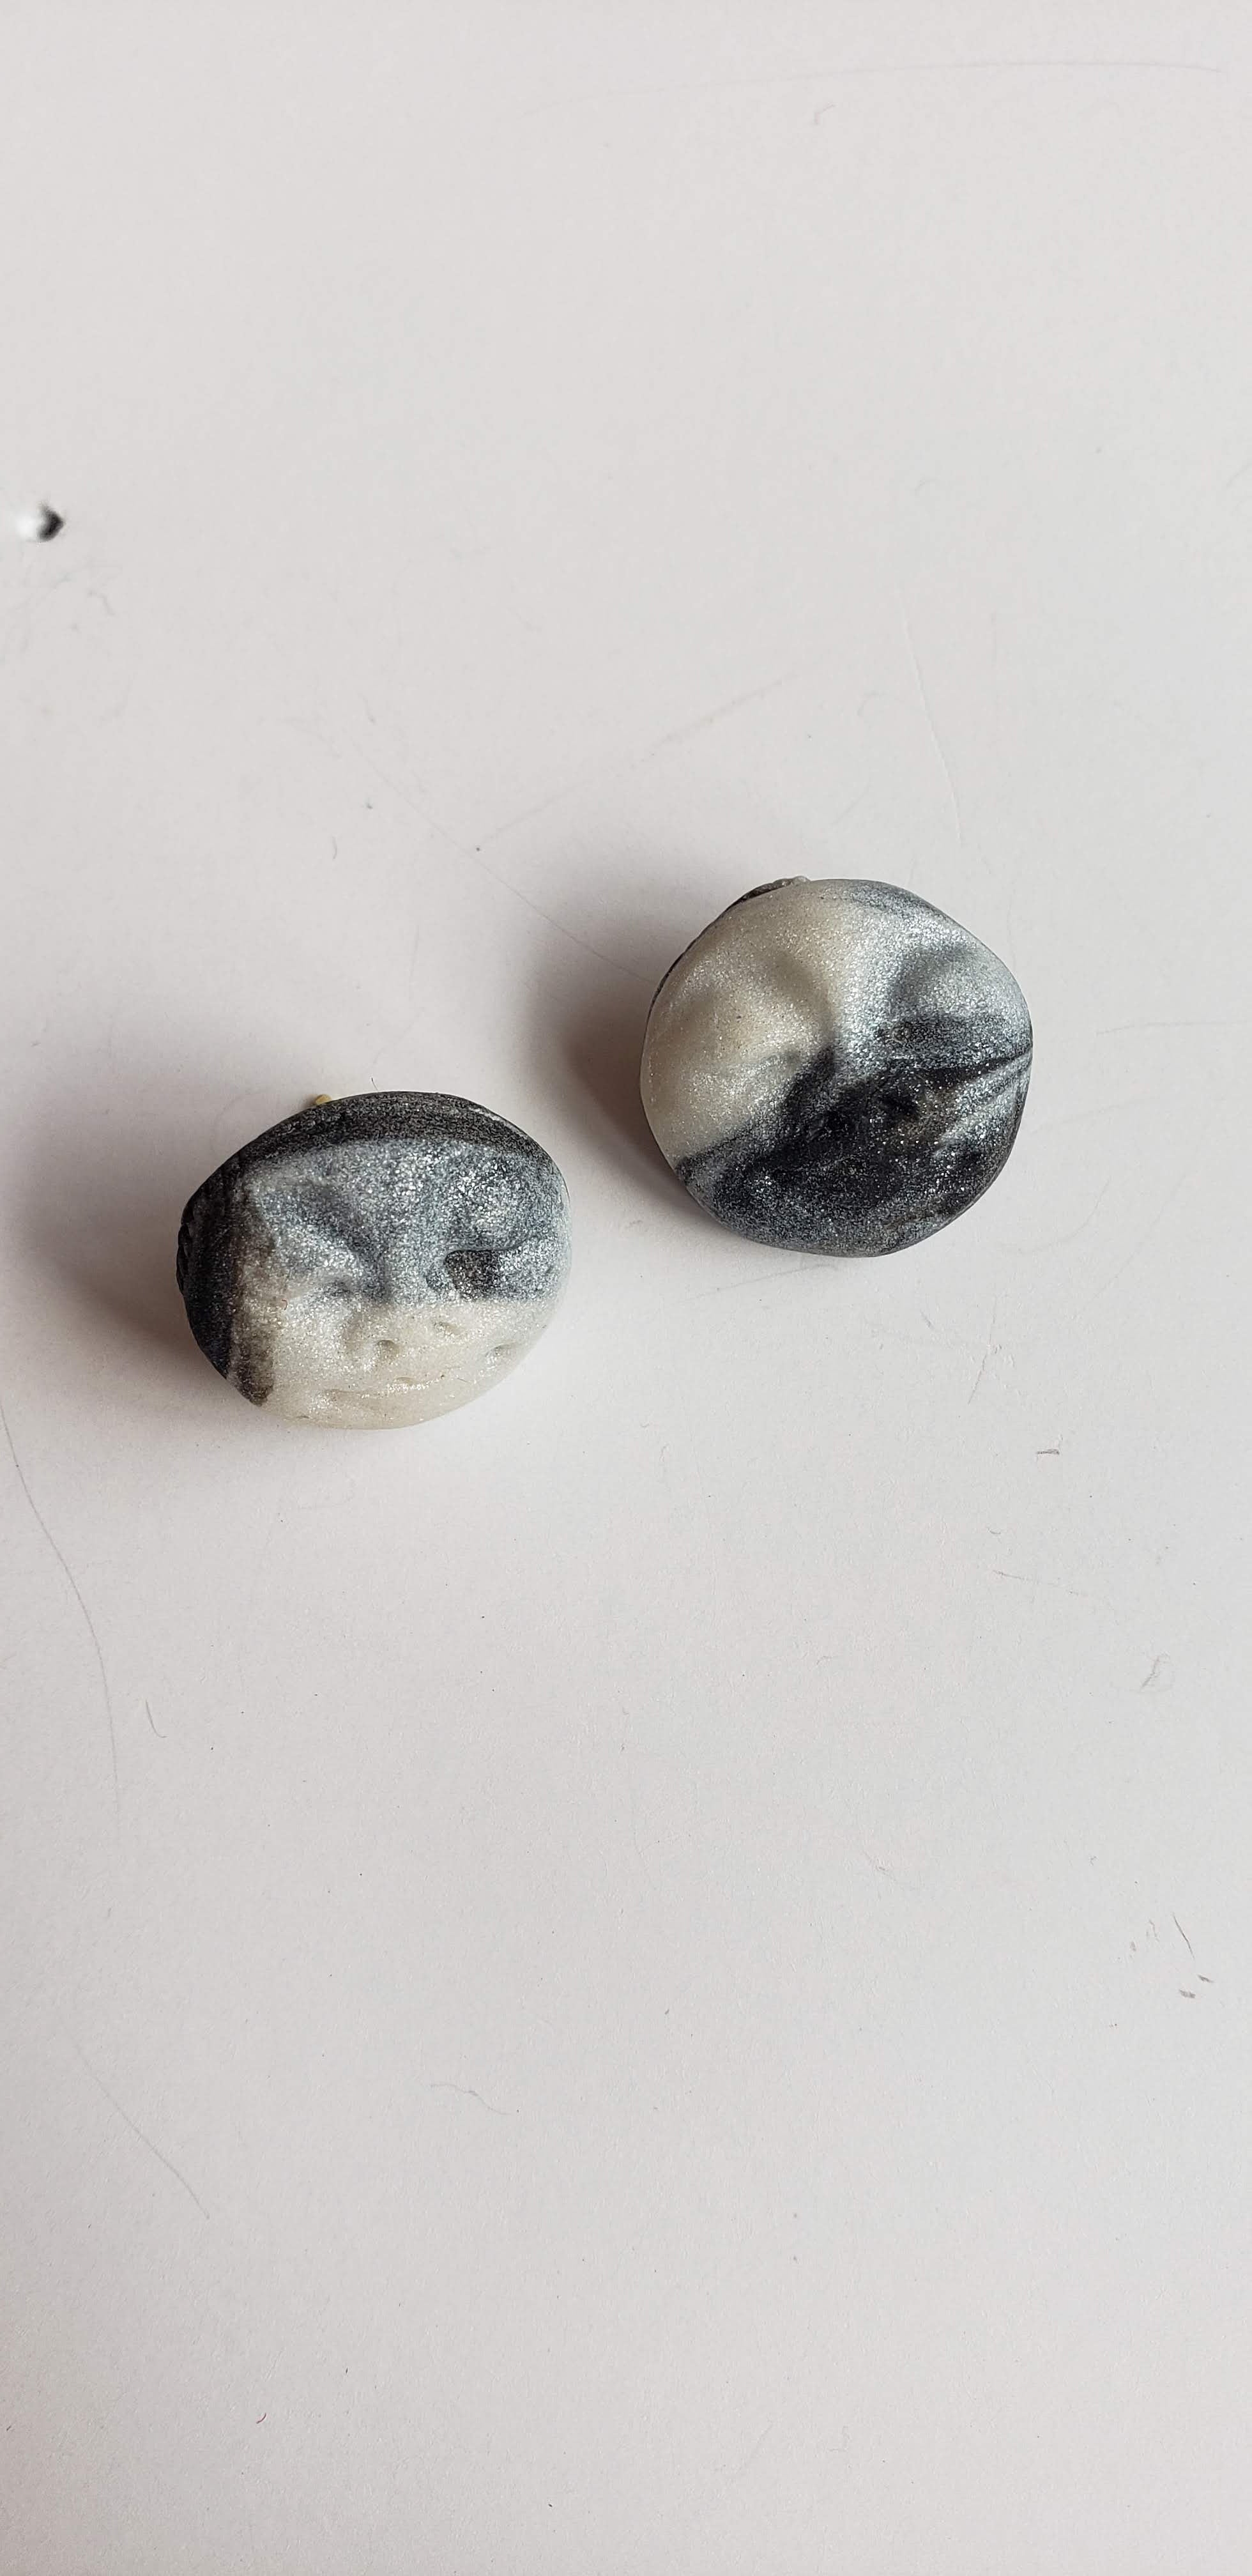 Handmade Moon Face Polymer Clay Earrings - Cream/Black Metallic